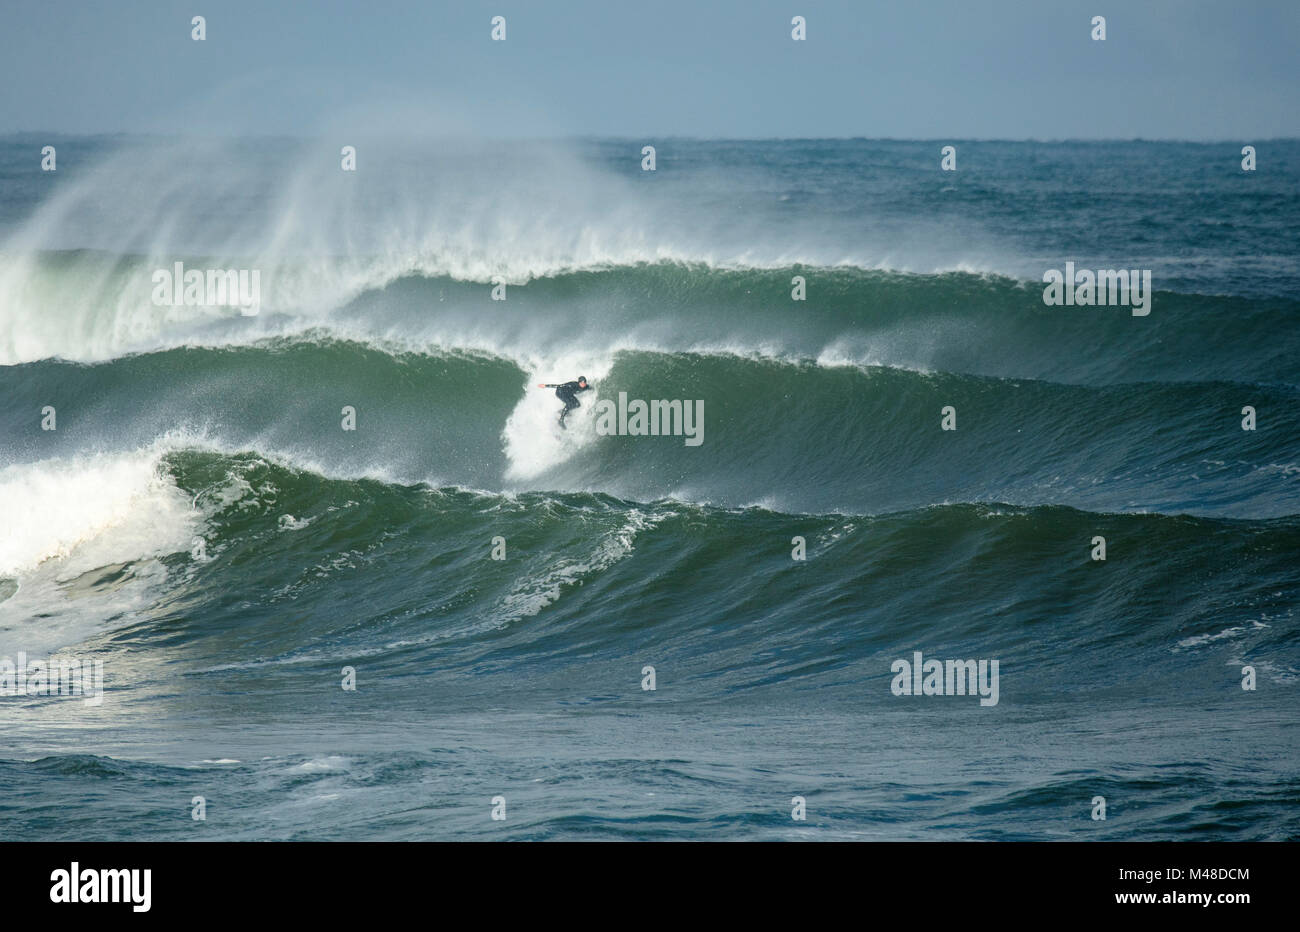 Surfer riding a wave at Easky, County Sligo, Ireland. Stock Photo